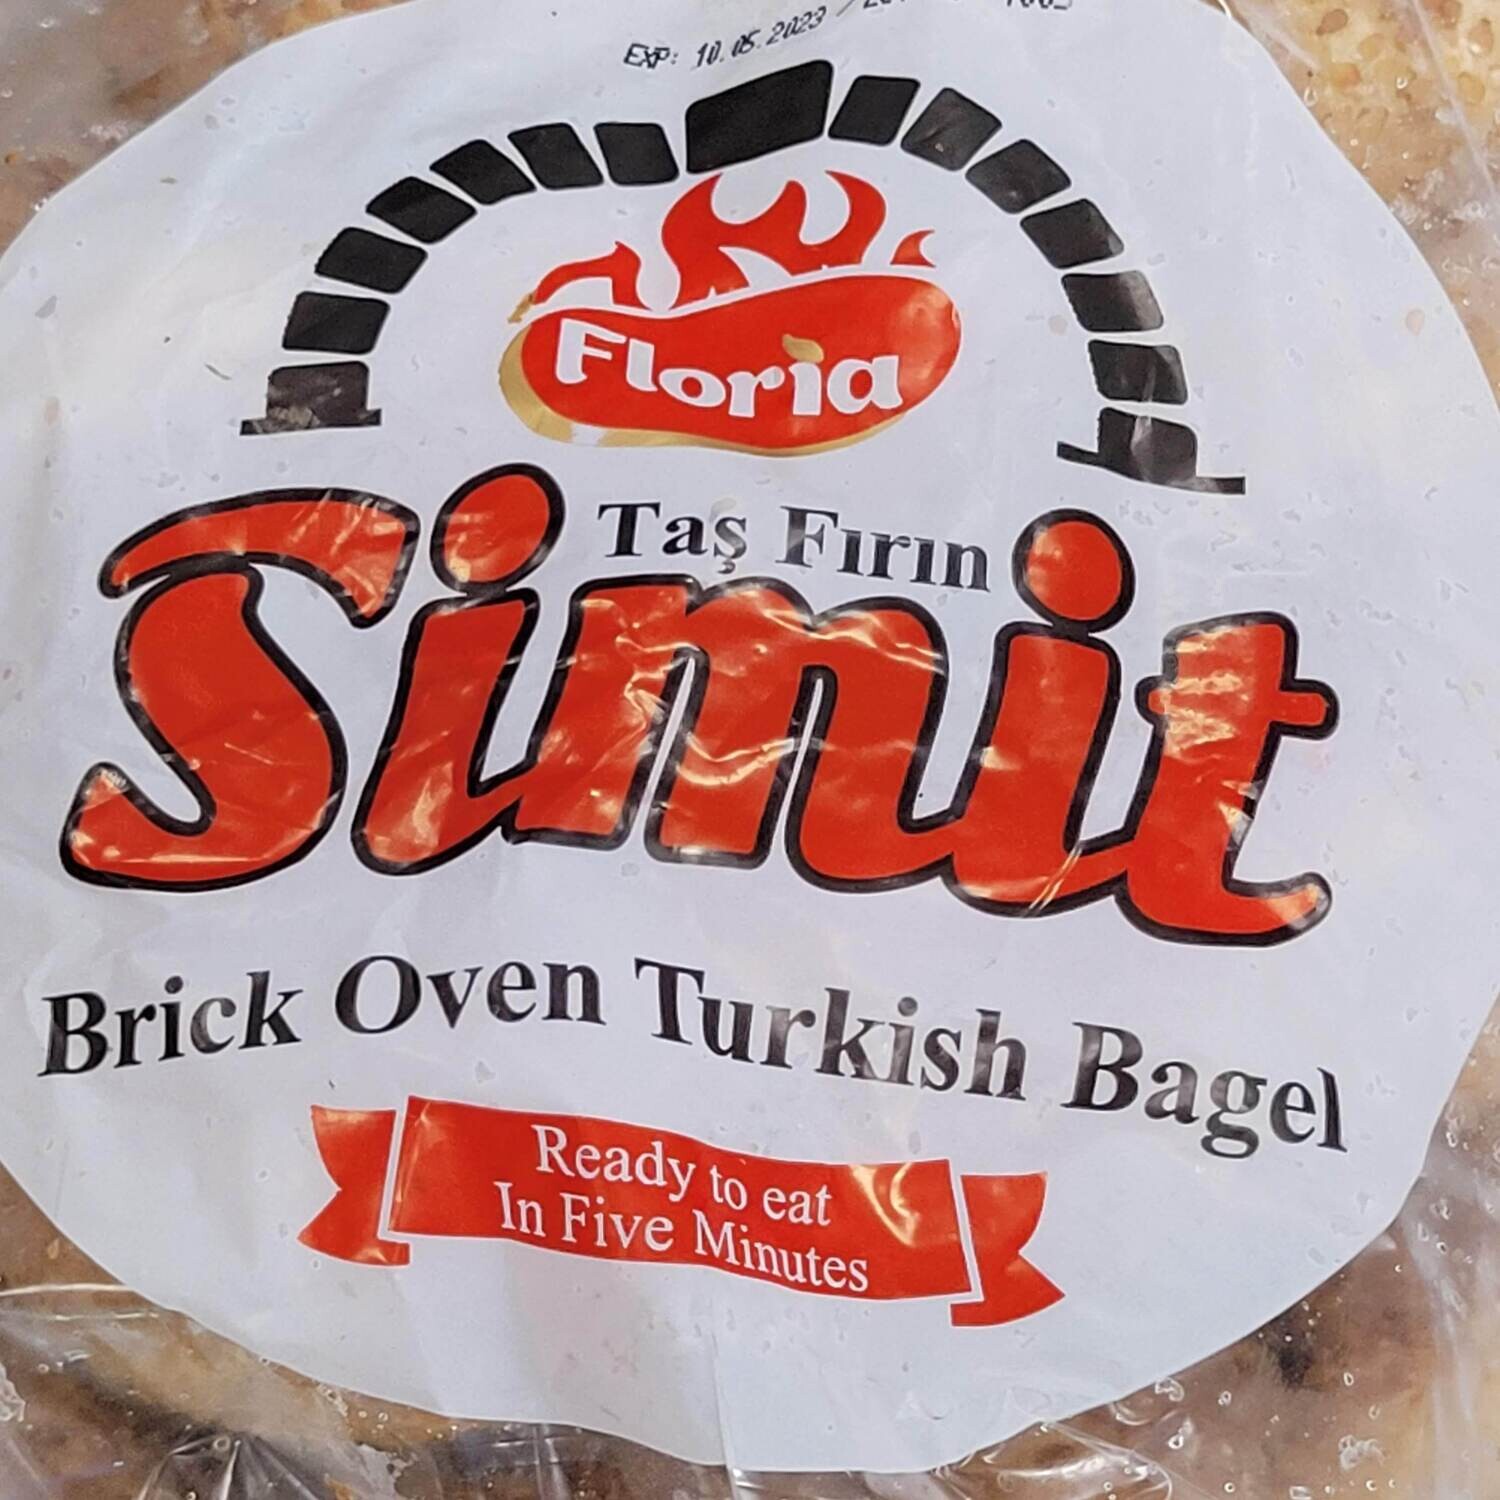 Simit - Stone Baked Tas Firin  (Turkish Bagel) 4 PCS by Floria